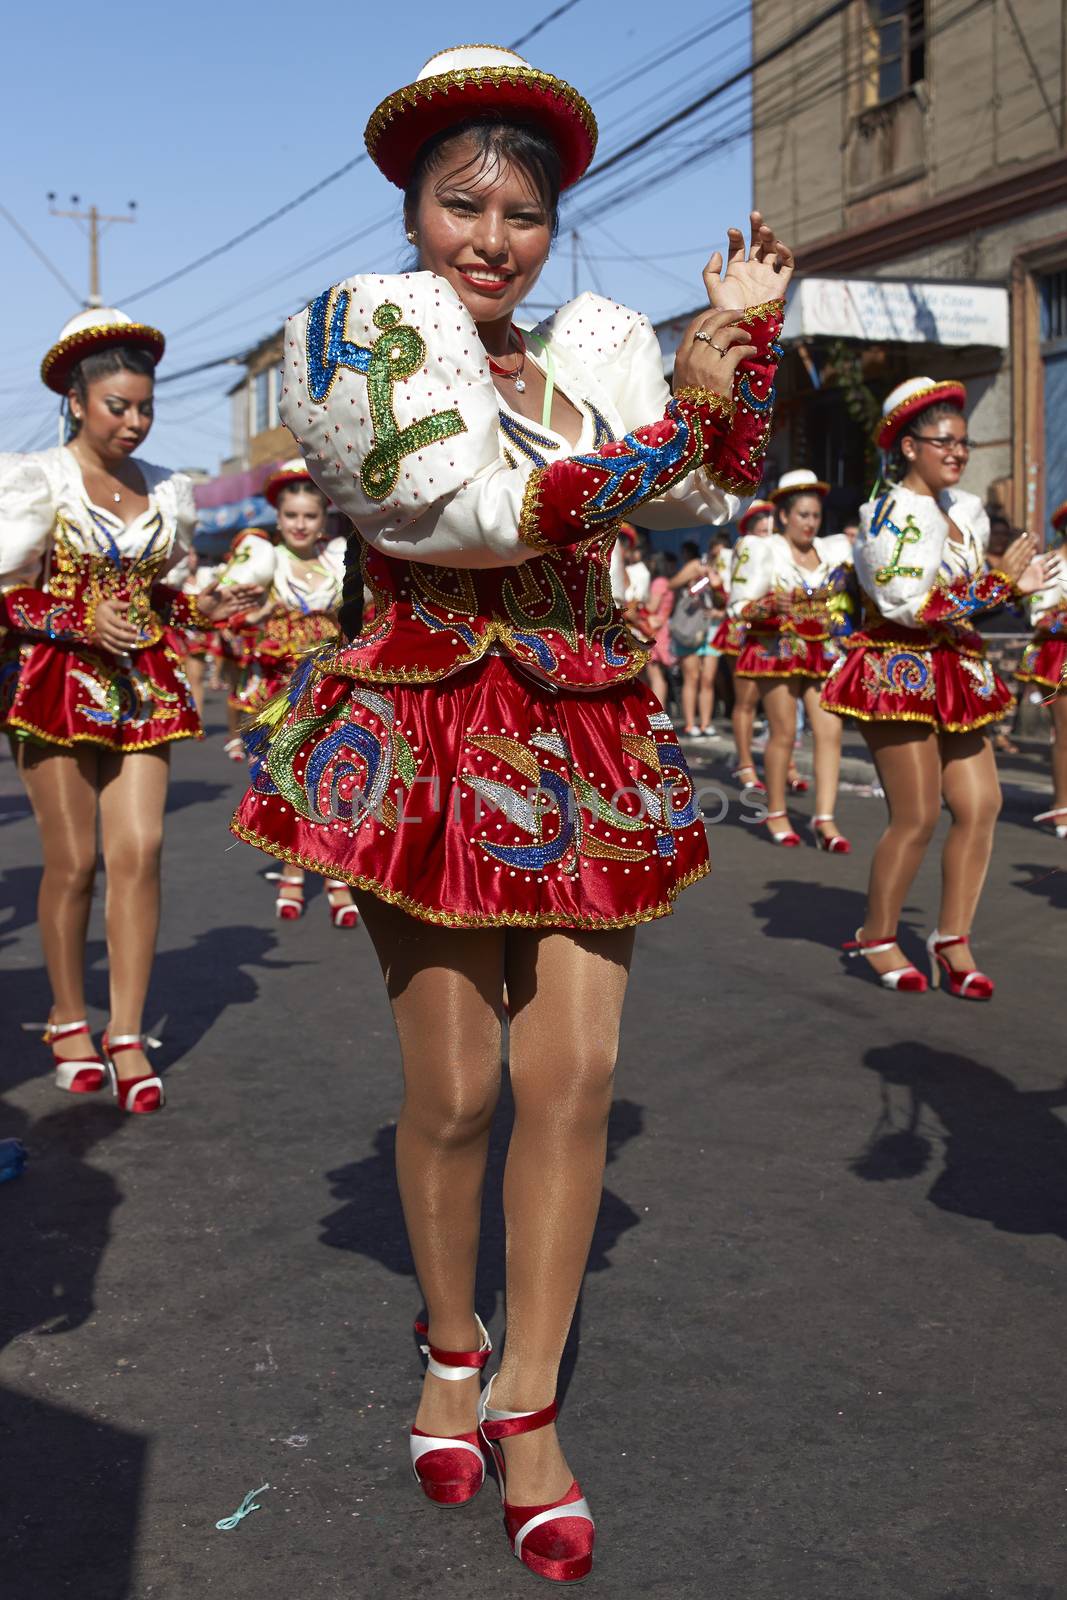 Caporales dancers in ornate costumes performing at the annual Carnaval Andino con la Fuerza del Sol in Arica, Chile.